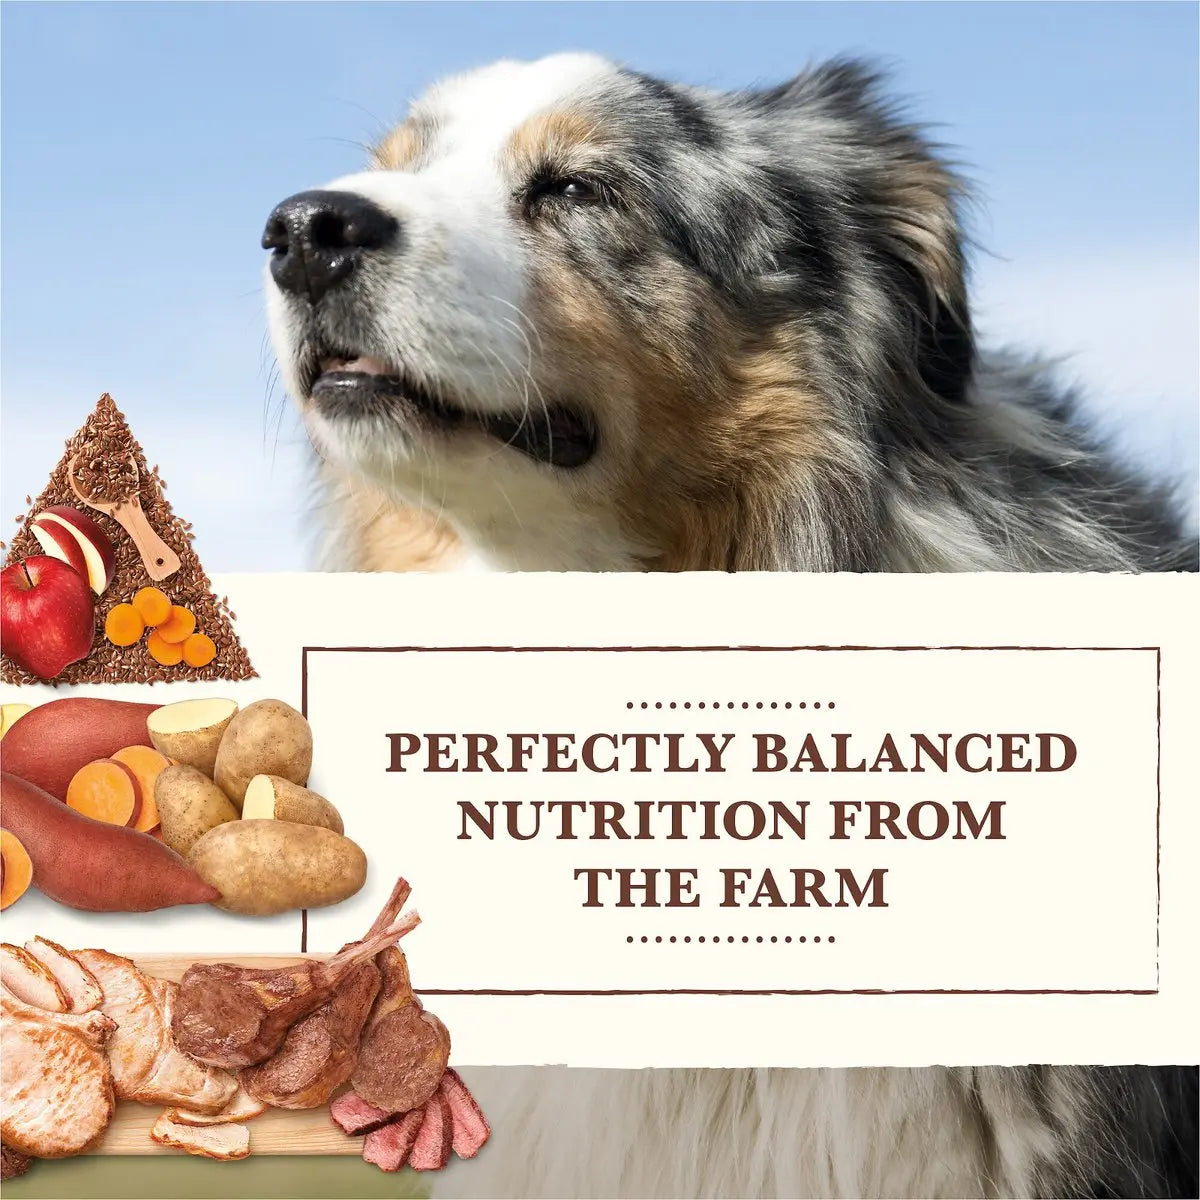 Whole Earth Farms® Goodness from the Earth Grain Free Pork, Beef & Lamb Recipe Dog Food 25 Lbs Whole Earth Farms®